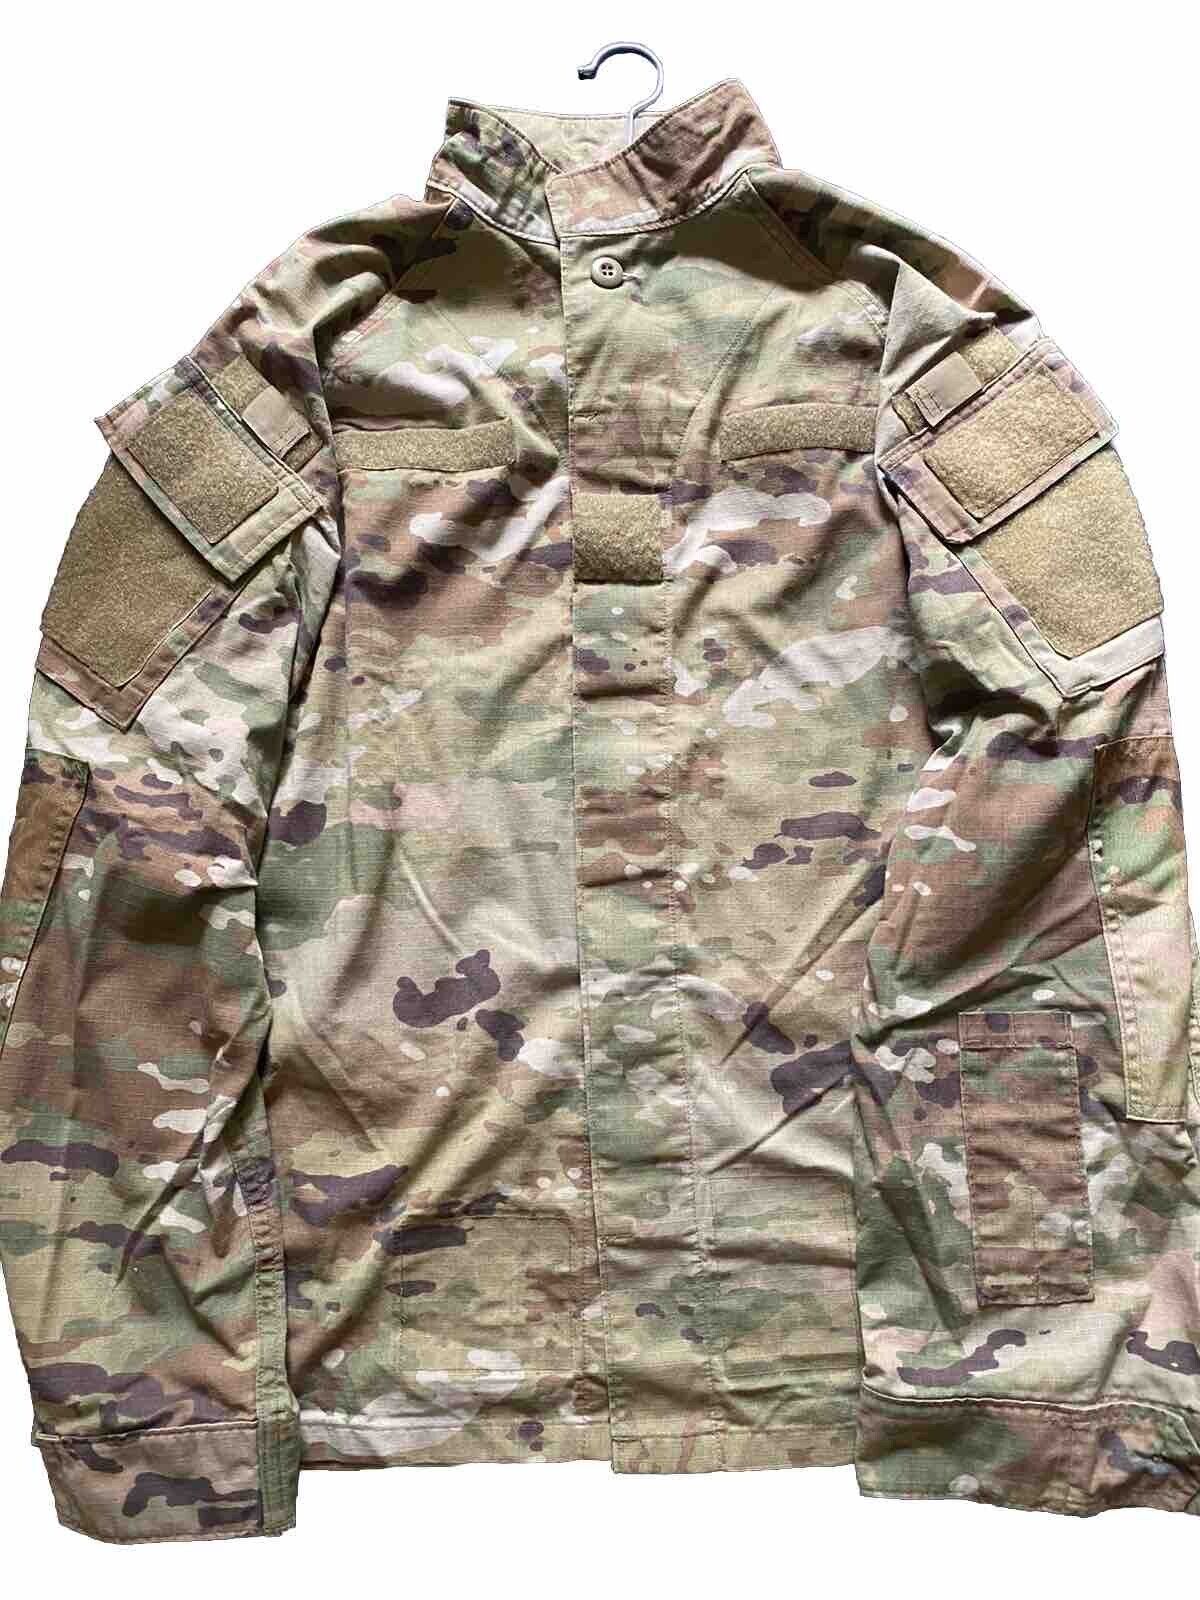 US Army OCP Shirt. Improved hot Weather Combat Uniform (IHWCU) Large Regular